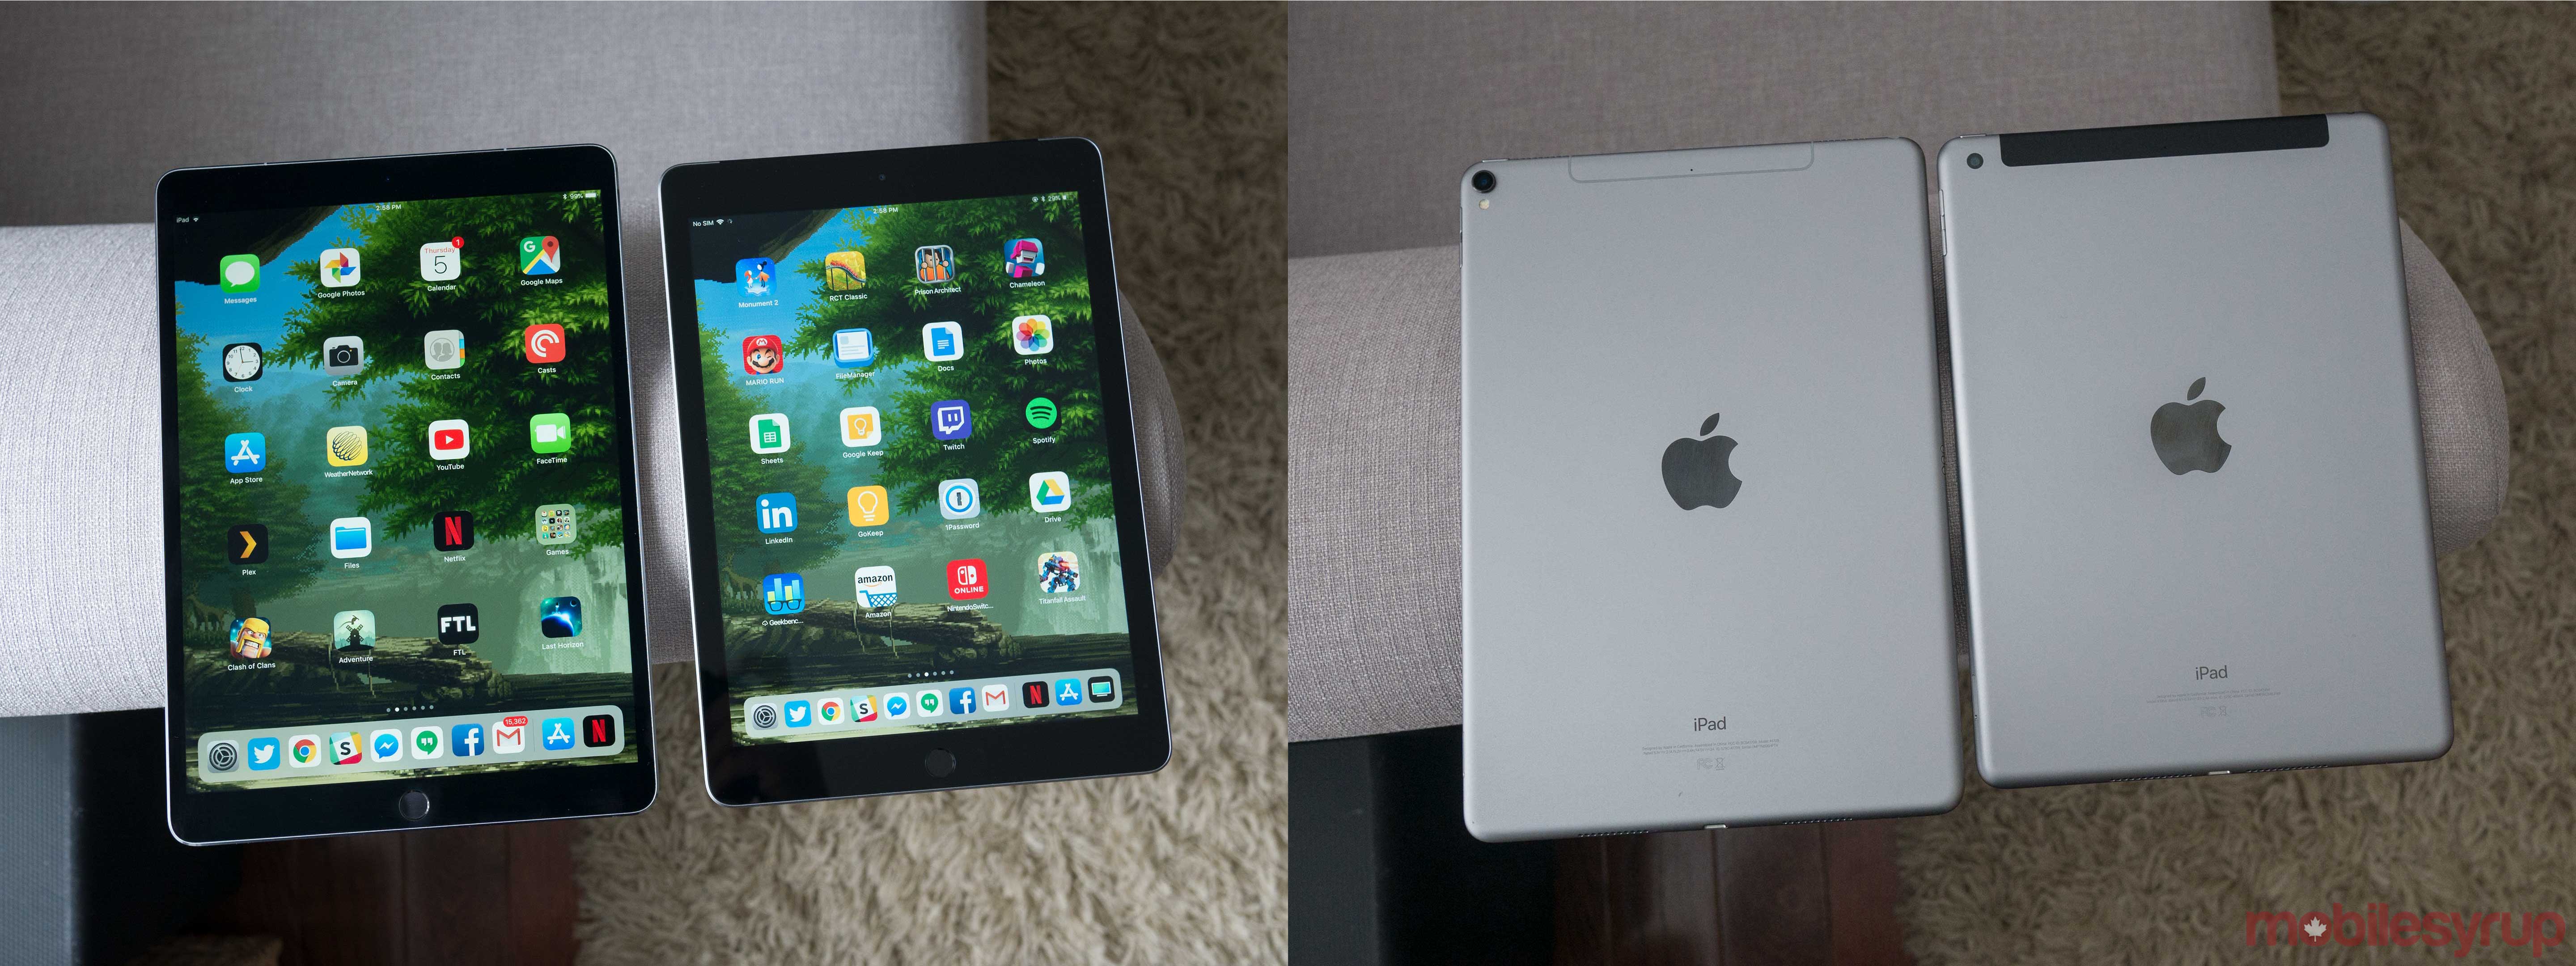 9.7-inch iPad vs 10.5-inch iPad Pro 